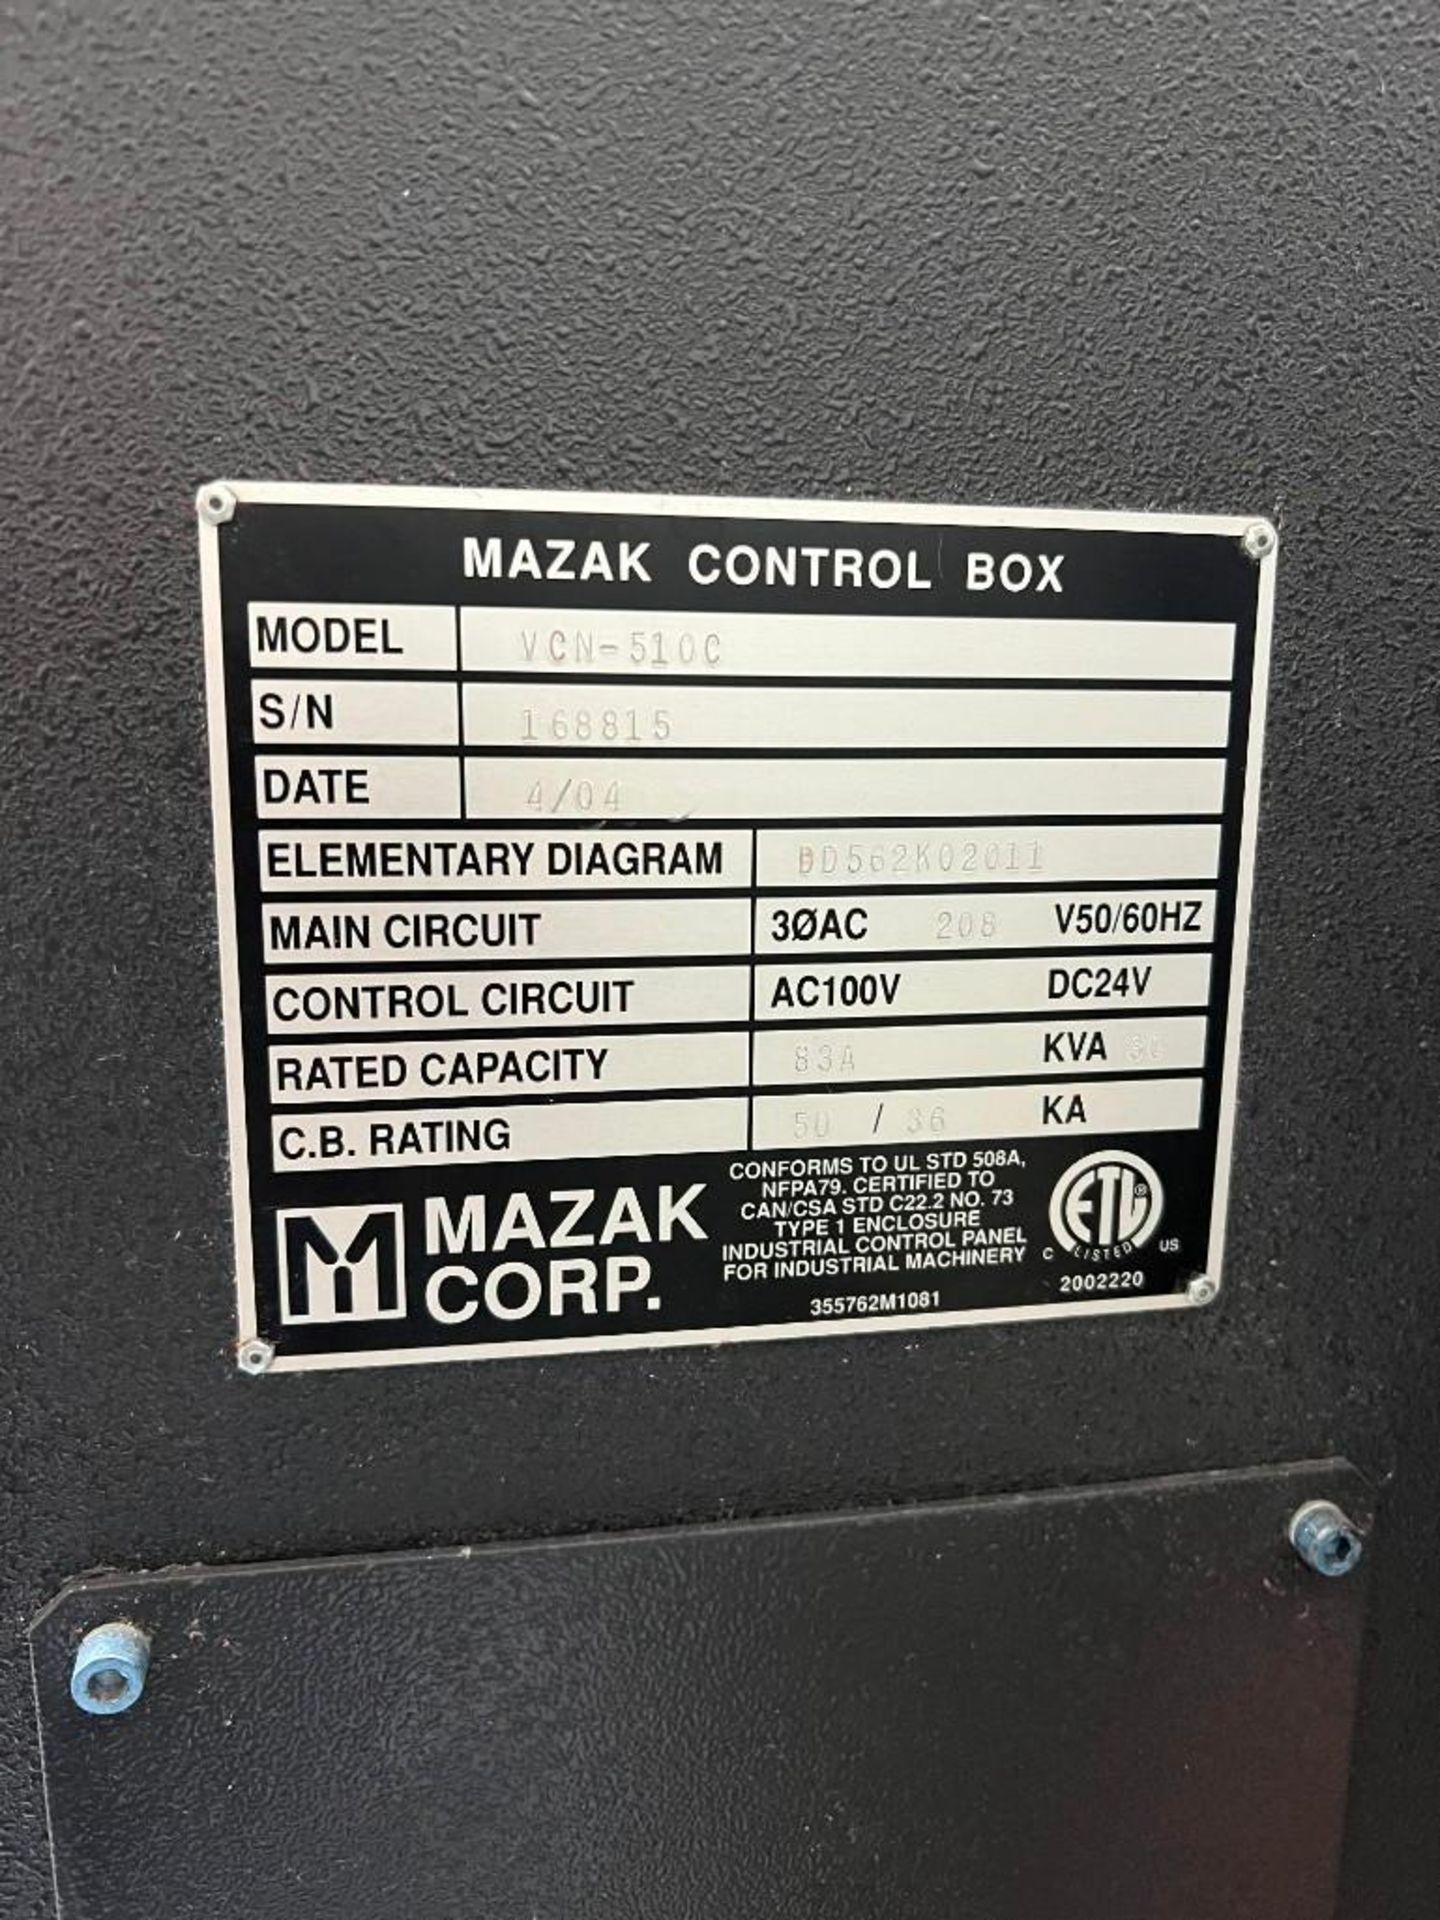 2004 Mazak VCN-510C Vertical Machining Center - Image 5 of 9